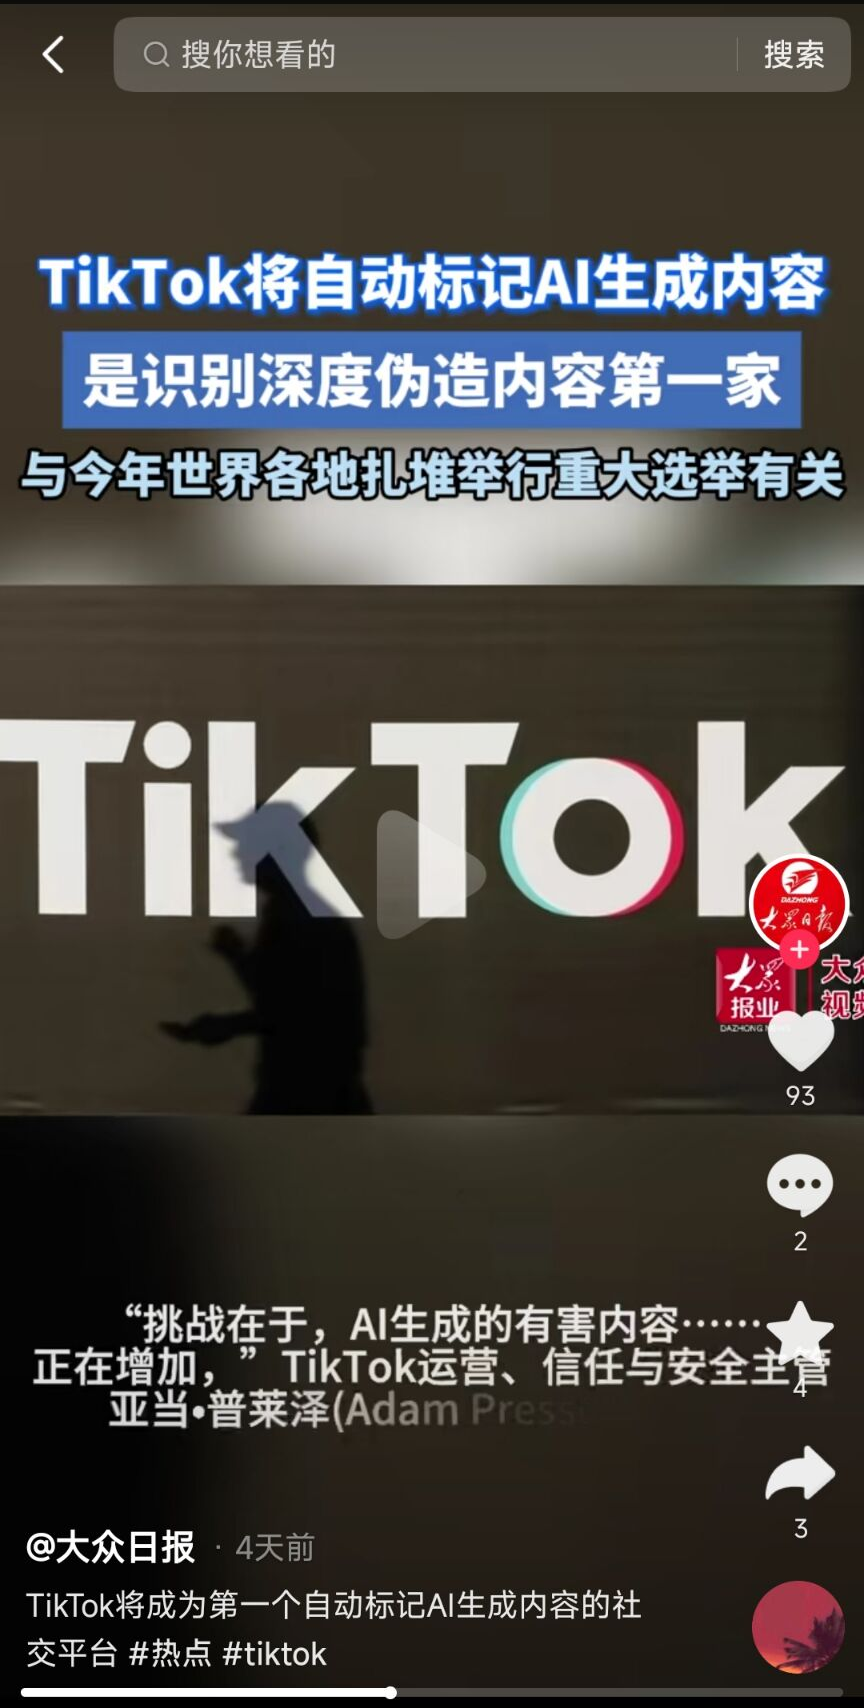 TikTok还推出了一项新政策，将对由人工智能生成的内容进行自动标记，以防止潜在滥用